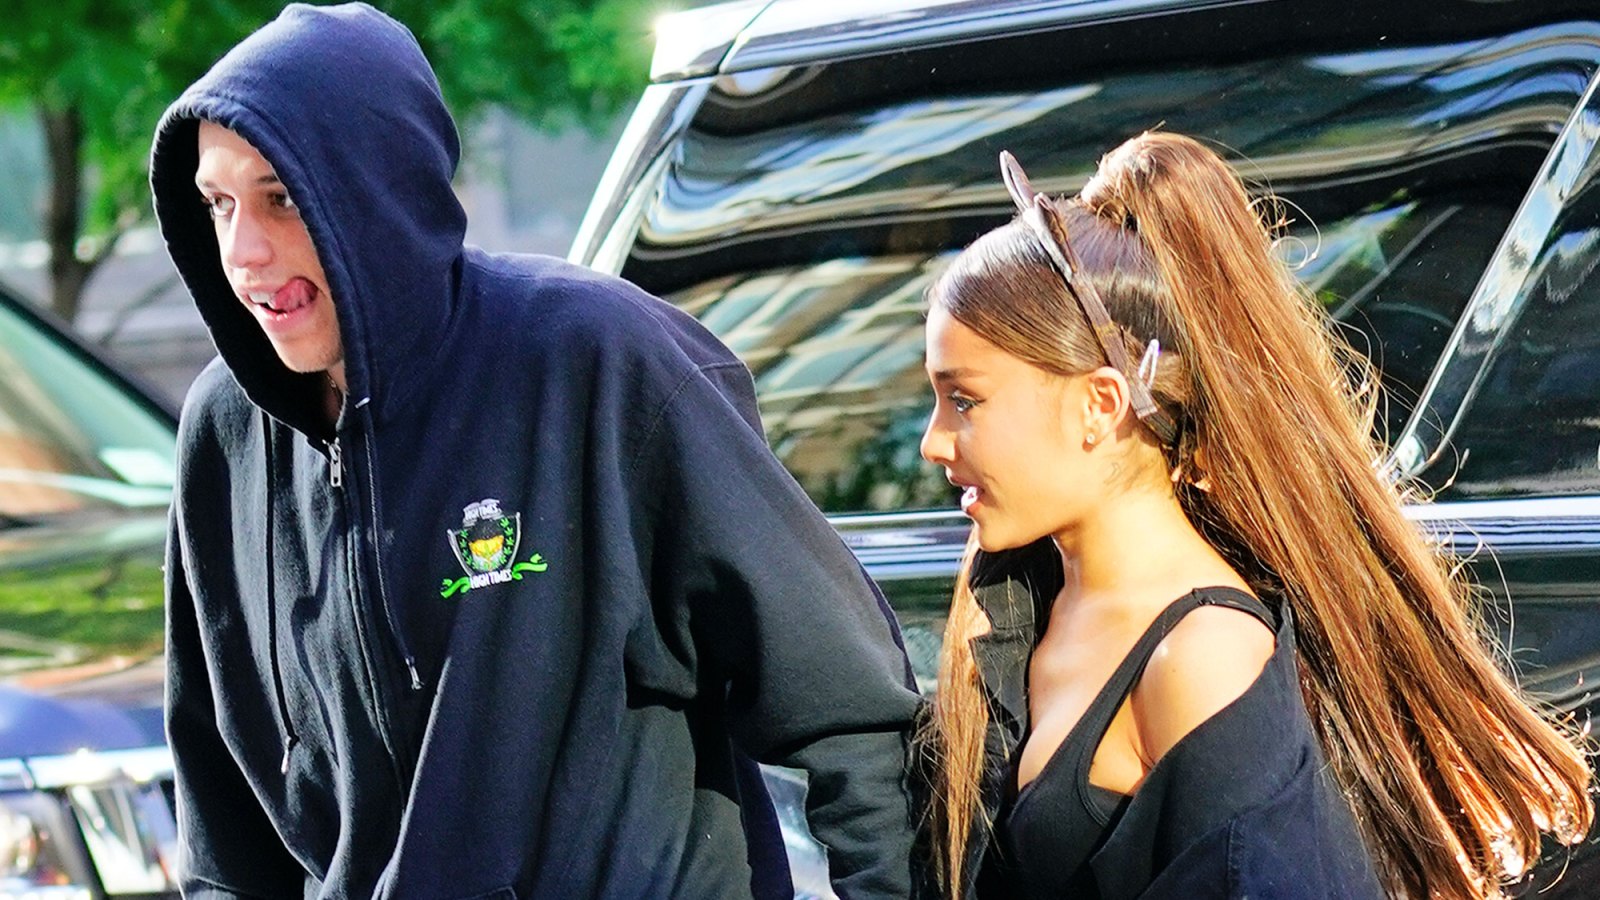 Ariana Grande Has a Photo of Her Fiancé on Her Sweatshirt